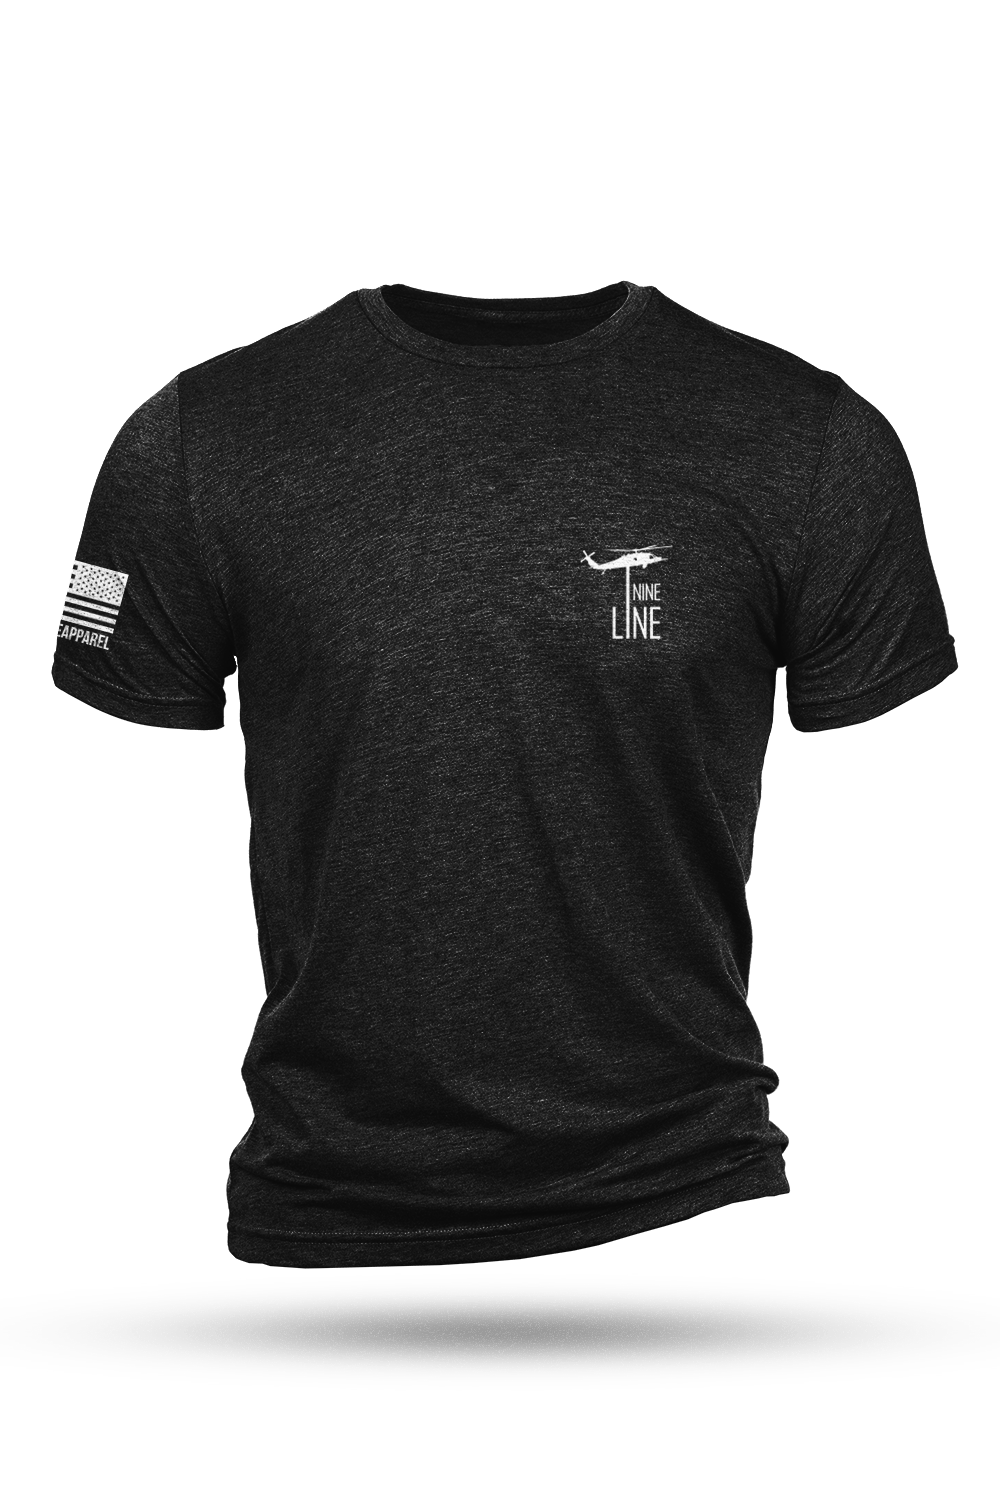 Men's Tri-Blend T-Shirt - Maltese Cross Schematic - Nine Line Apparel